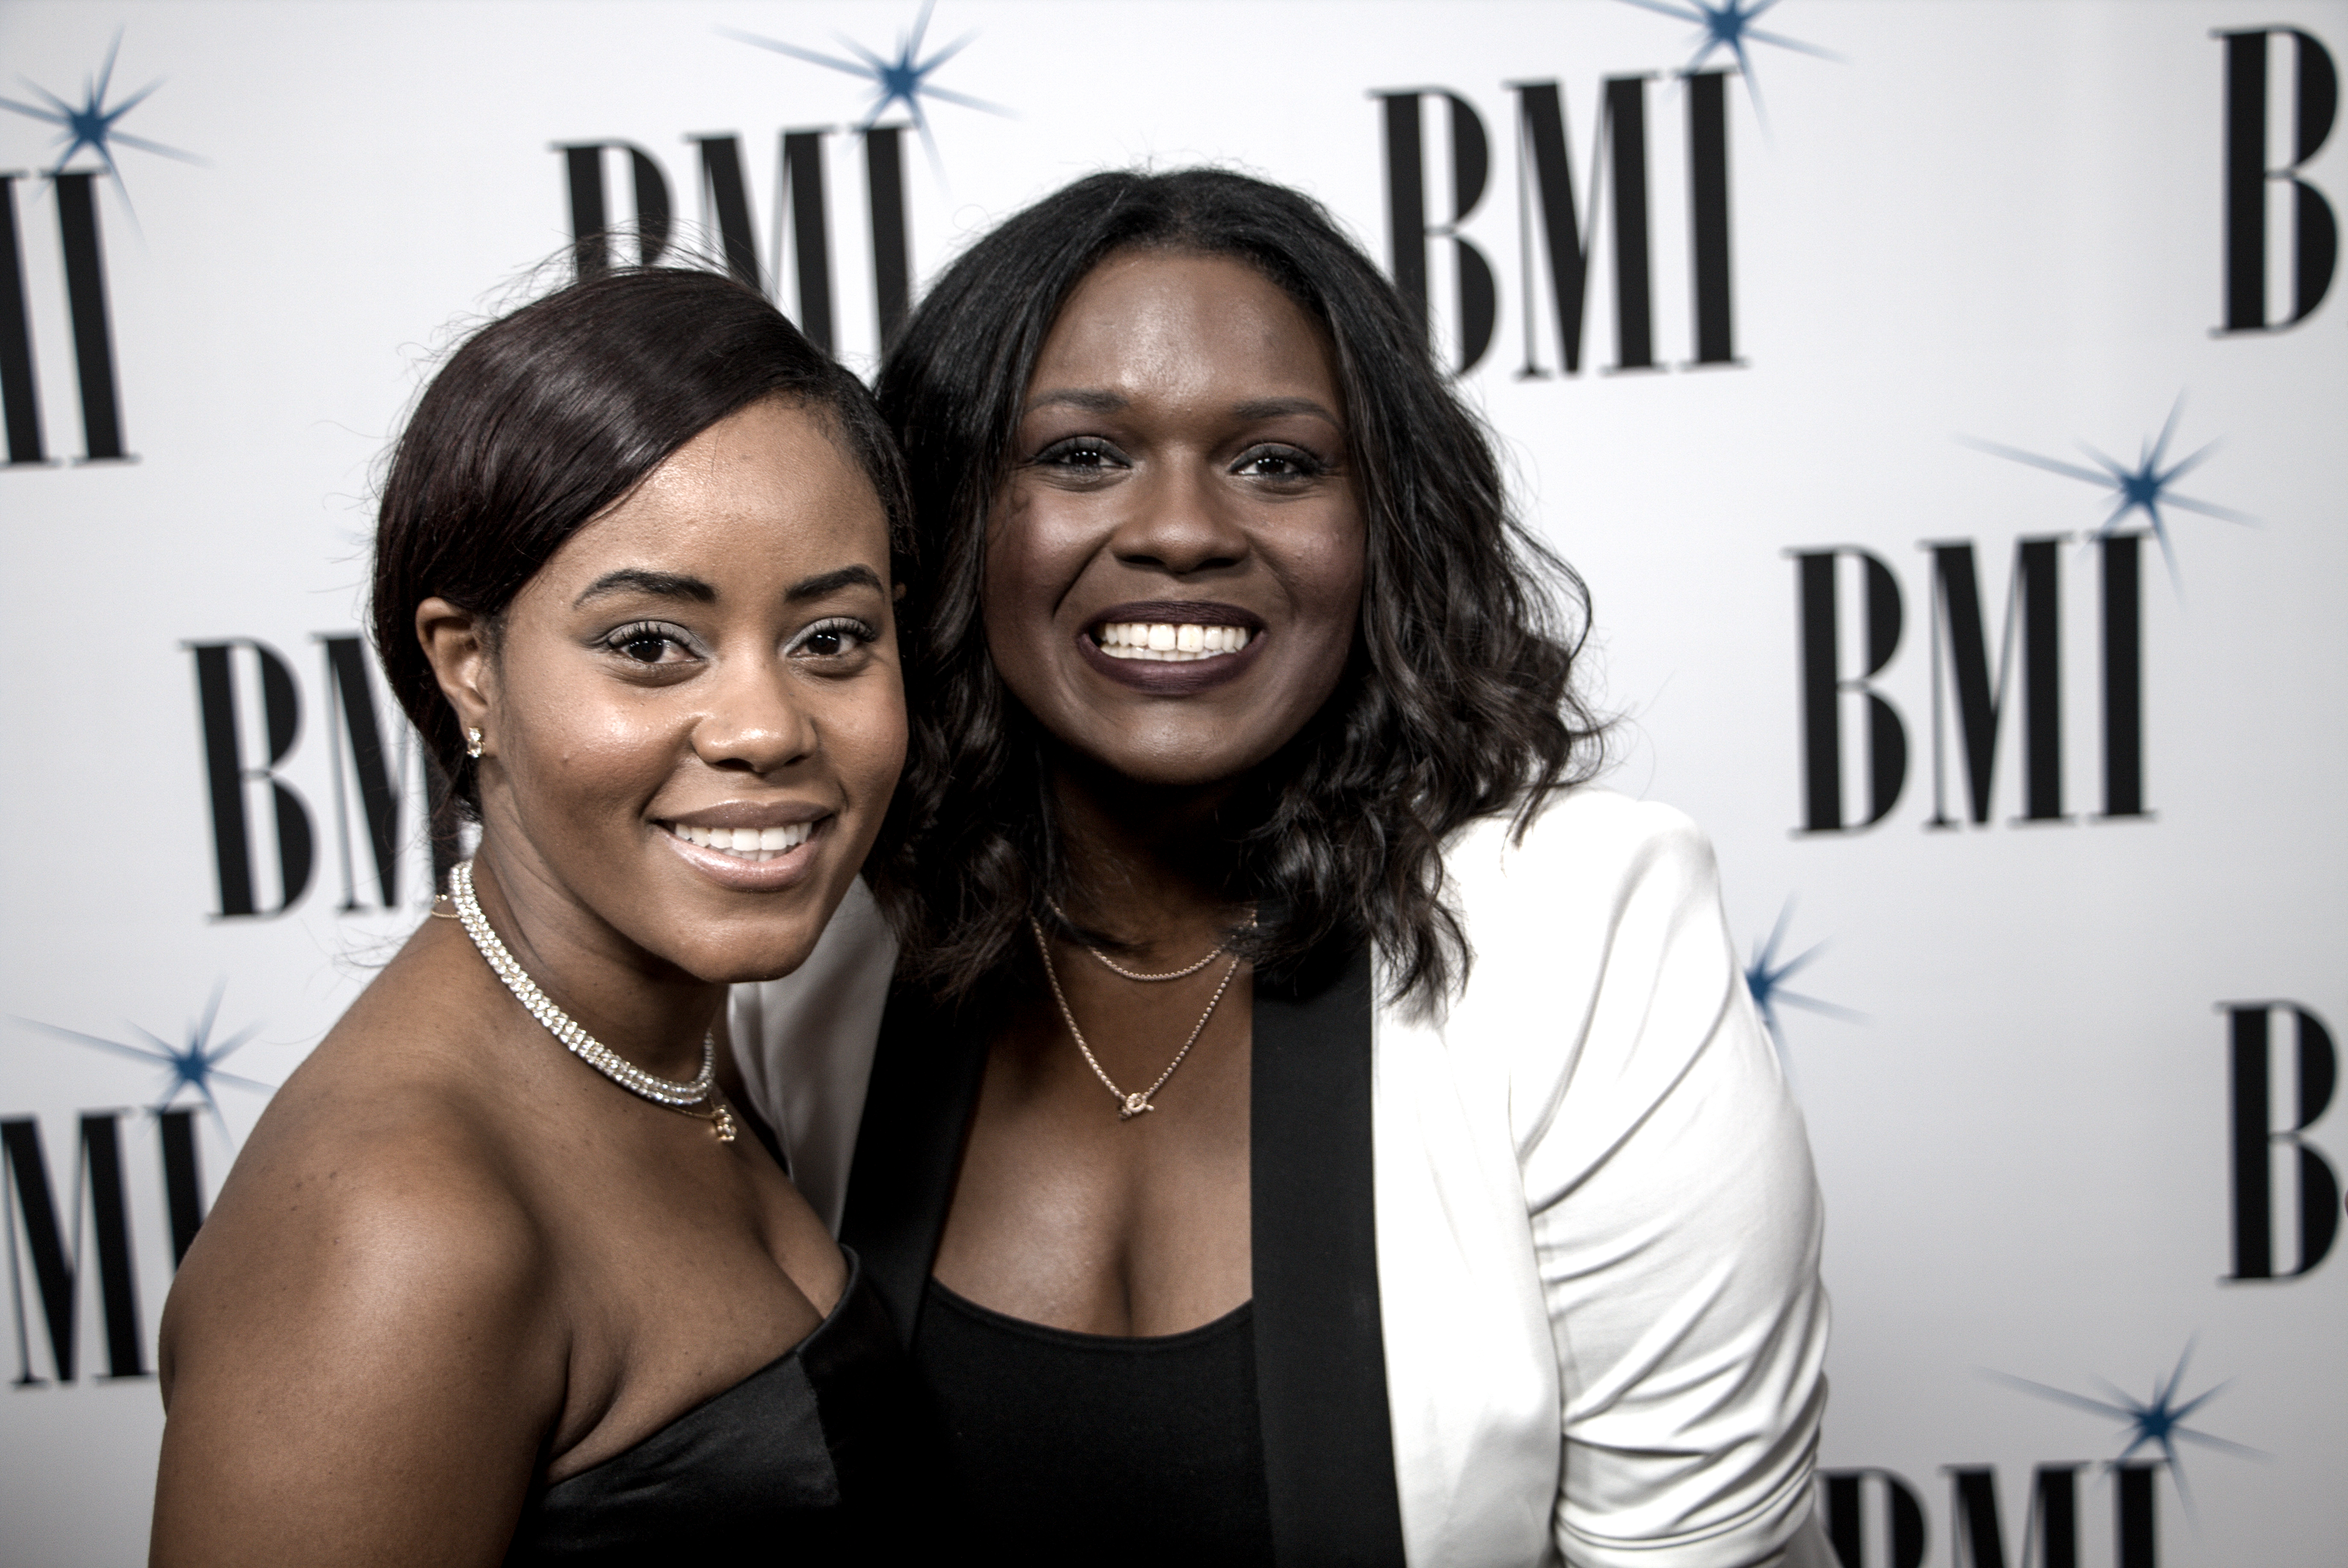 BMI R and B Awards-21